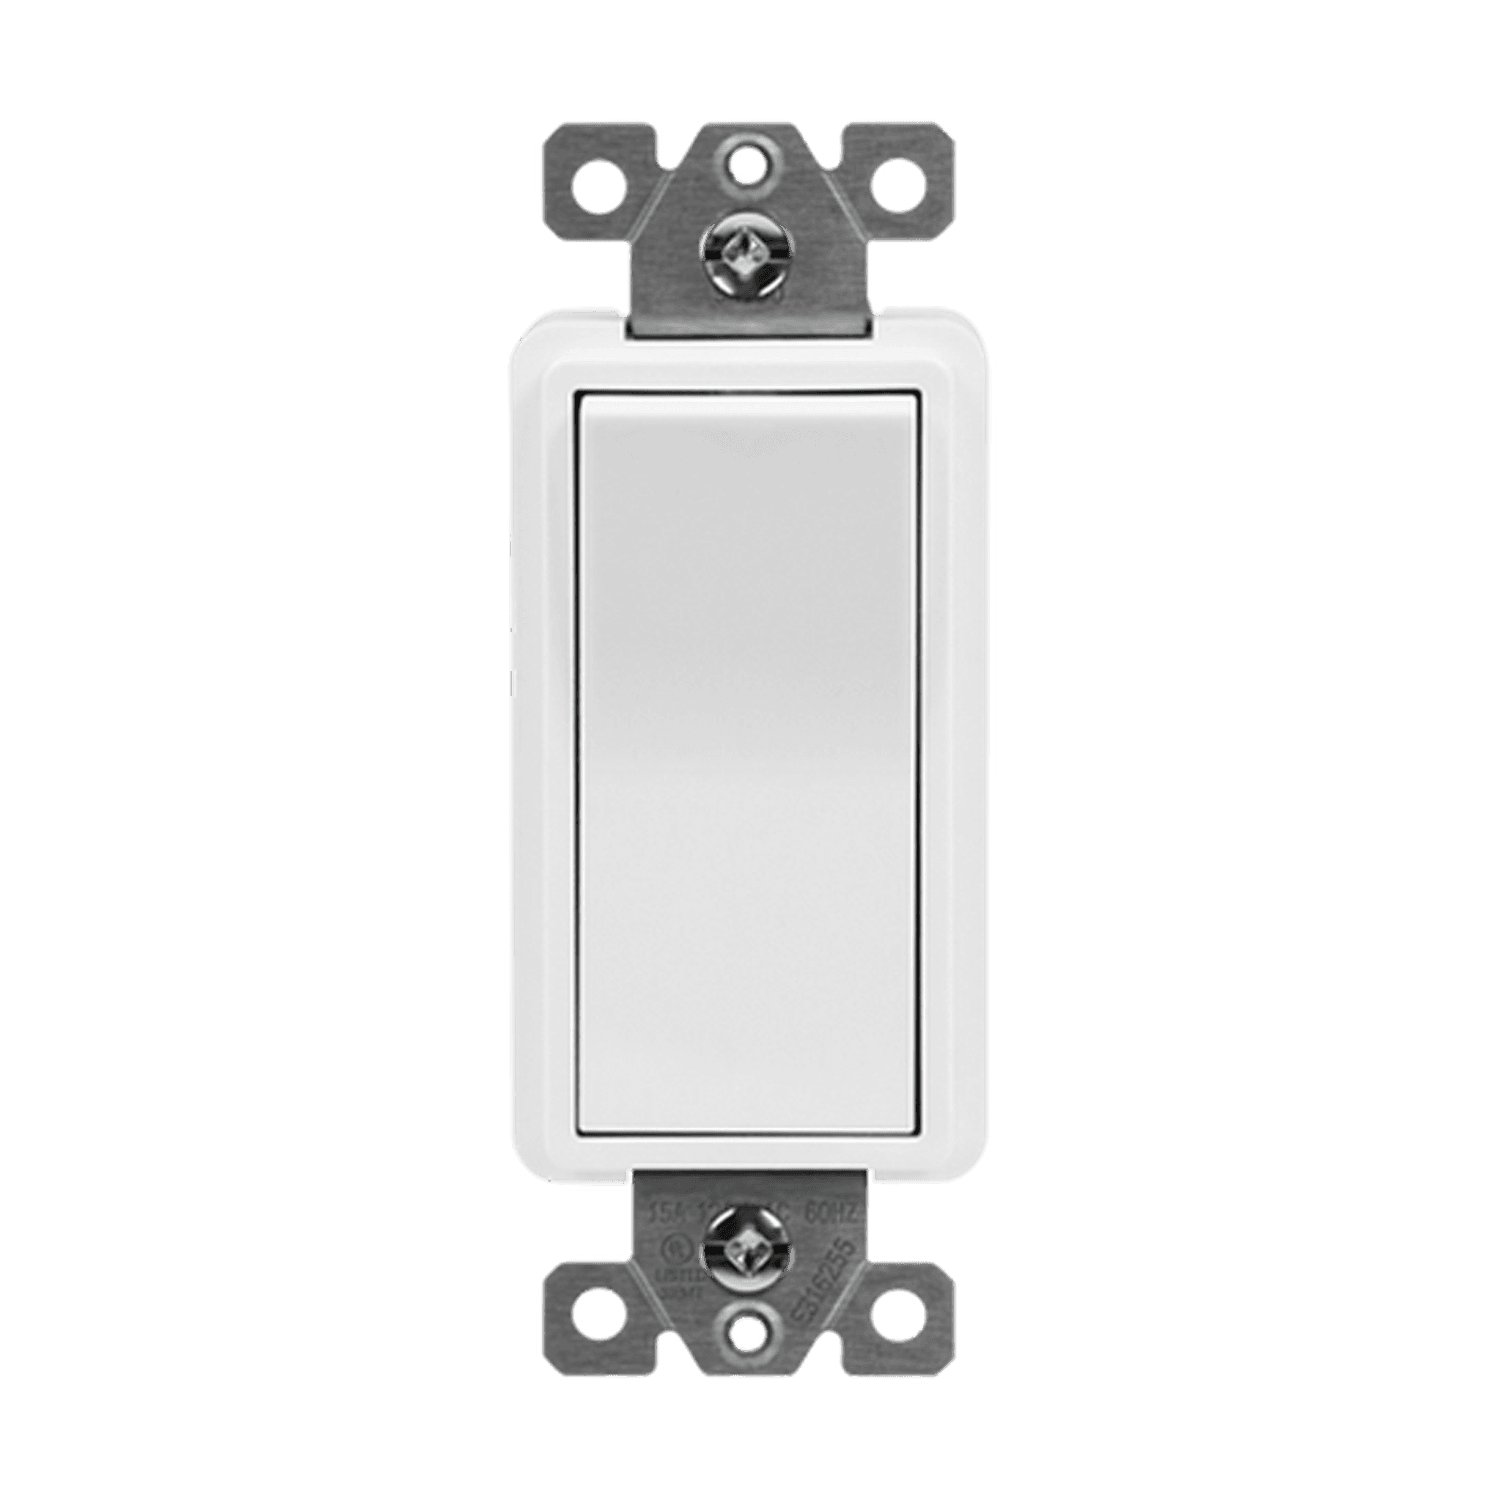 Enerlites 94150-W Residential Grade Decorator Switch, Four-Way